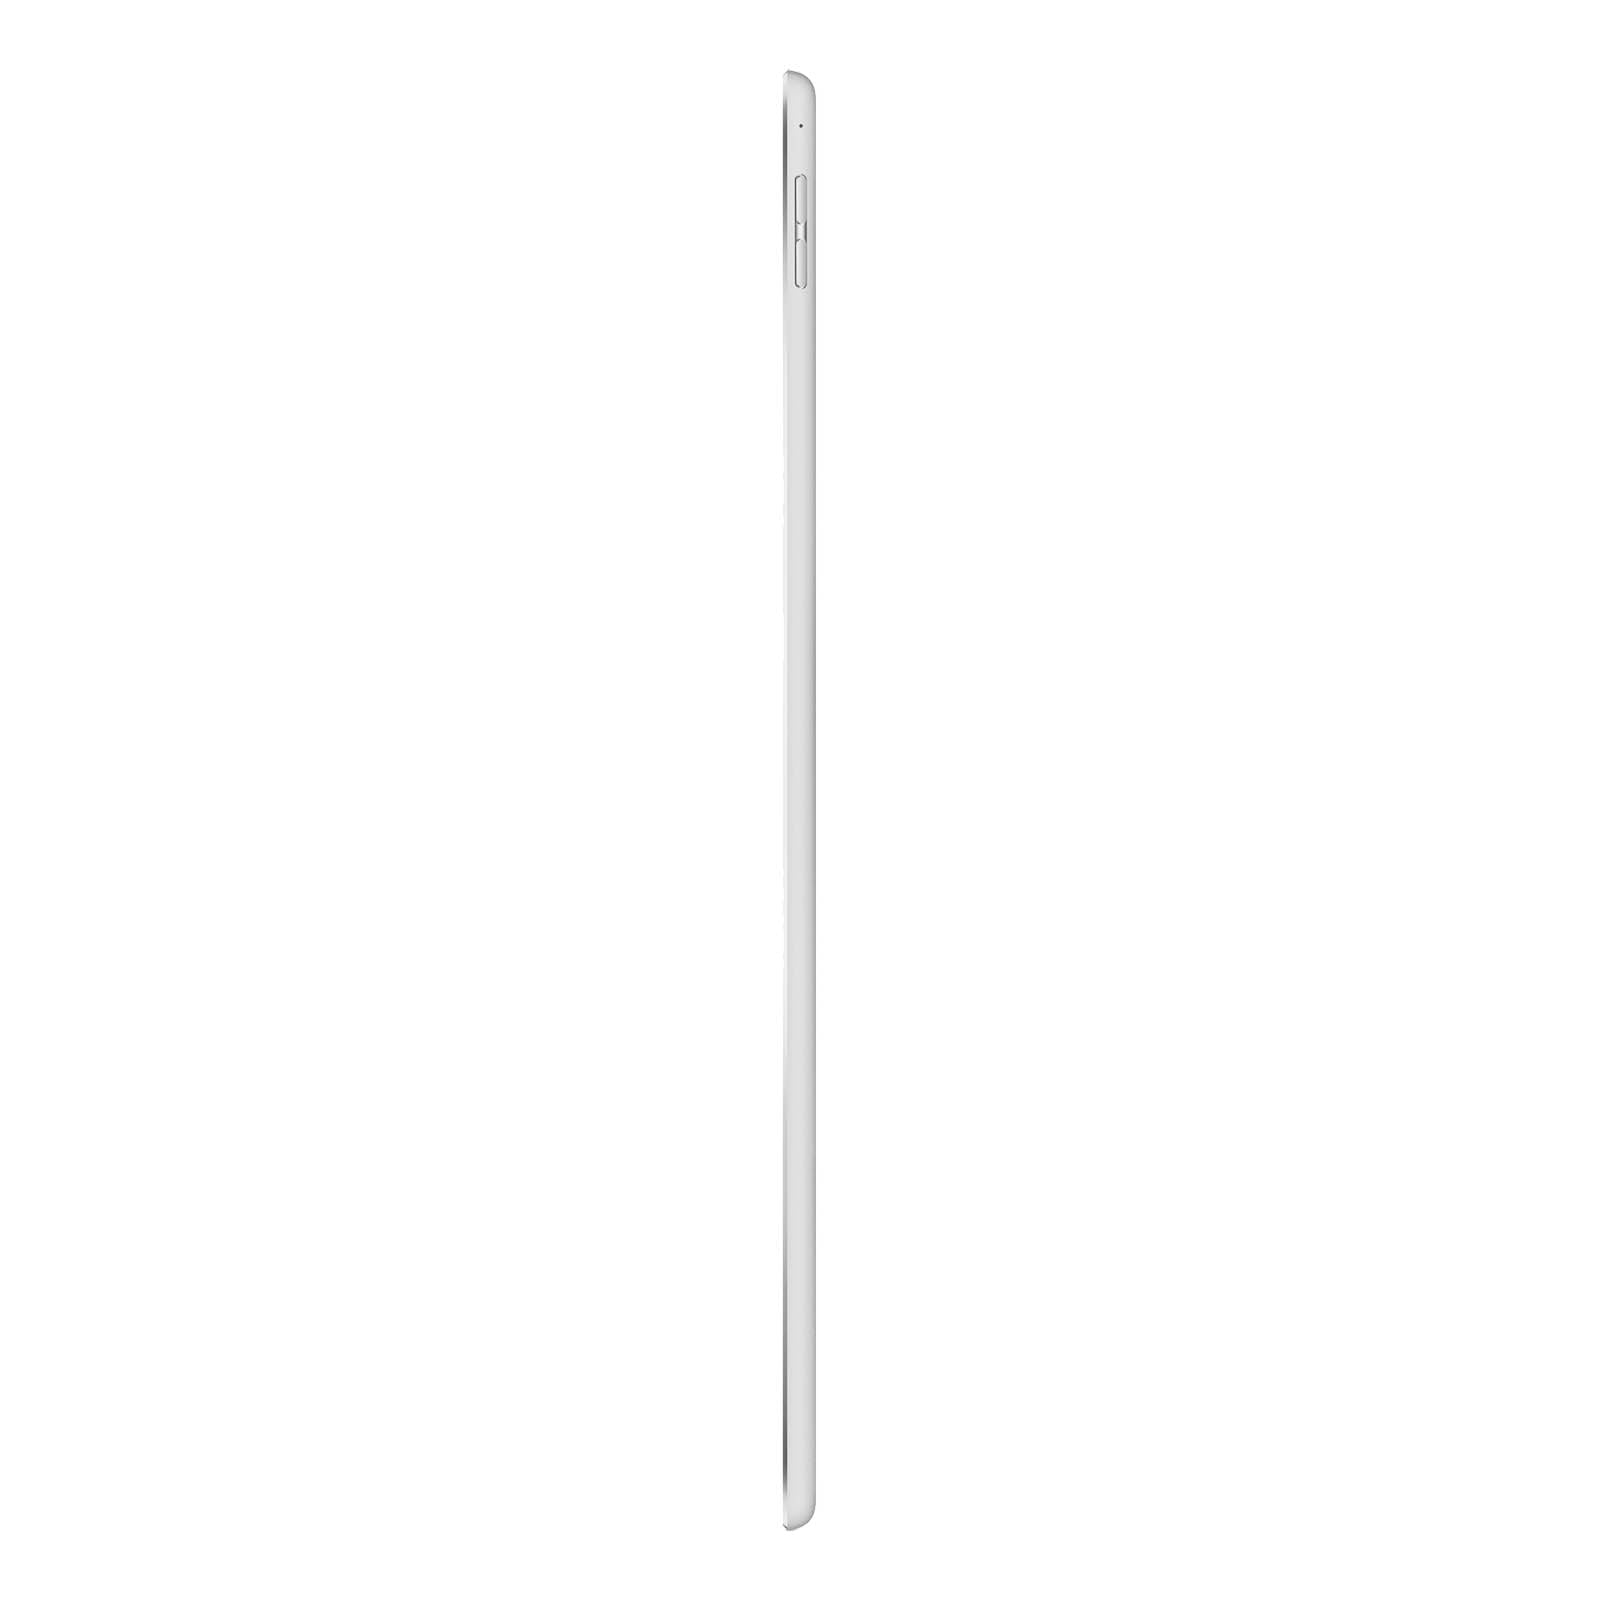 iPad Pro 12.9 Inch 3rd Gen 64GB Silver Pristine - Unlocked